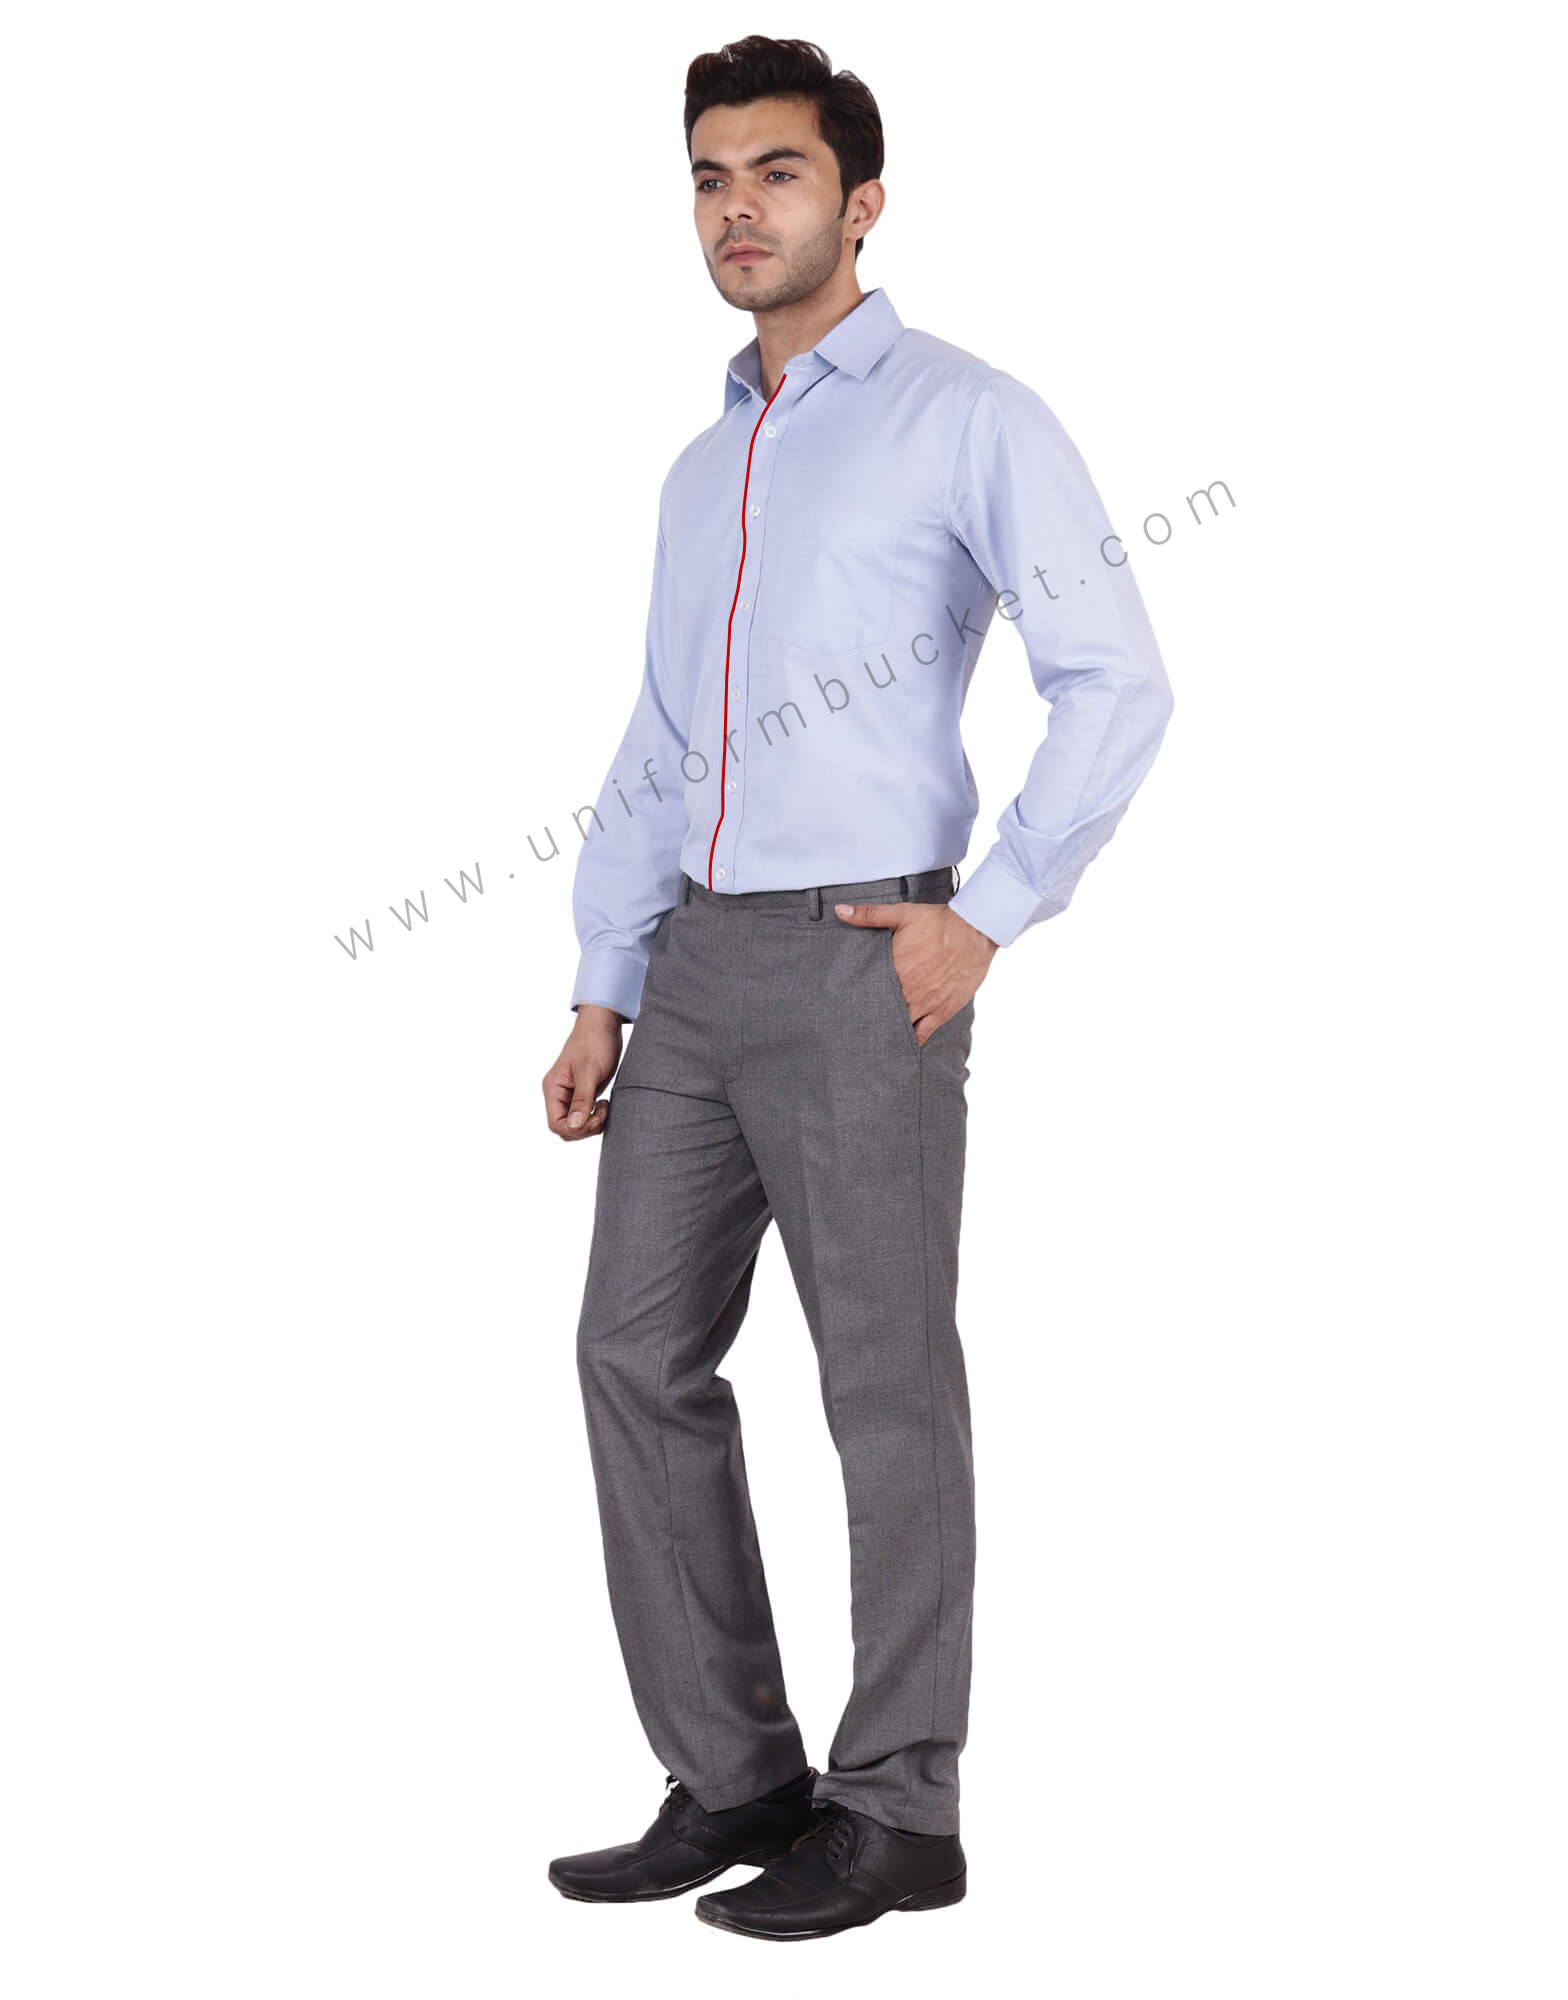 Americanelm Men's Light Grey Solid Slim Fit Stretchable Formal Trouser,  Narrow Fit Formal Trousers, मैन स्लिम फिट ट्राउजर, पुरुषों के स्लिम फिट  ट्राउजर - Madhuram Enterprises, Noida | ID: 26036895573